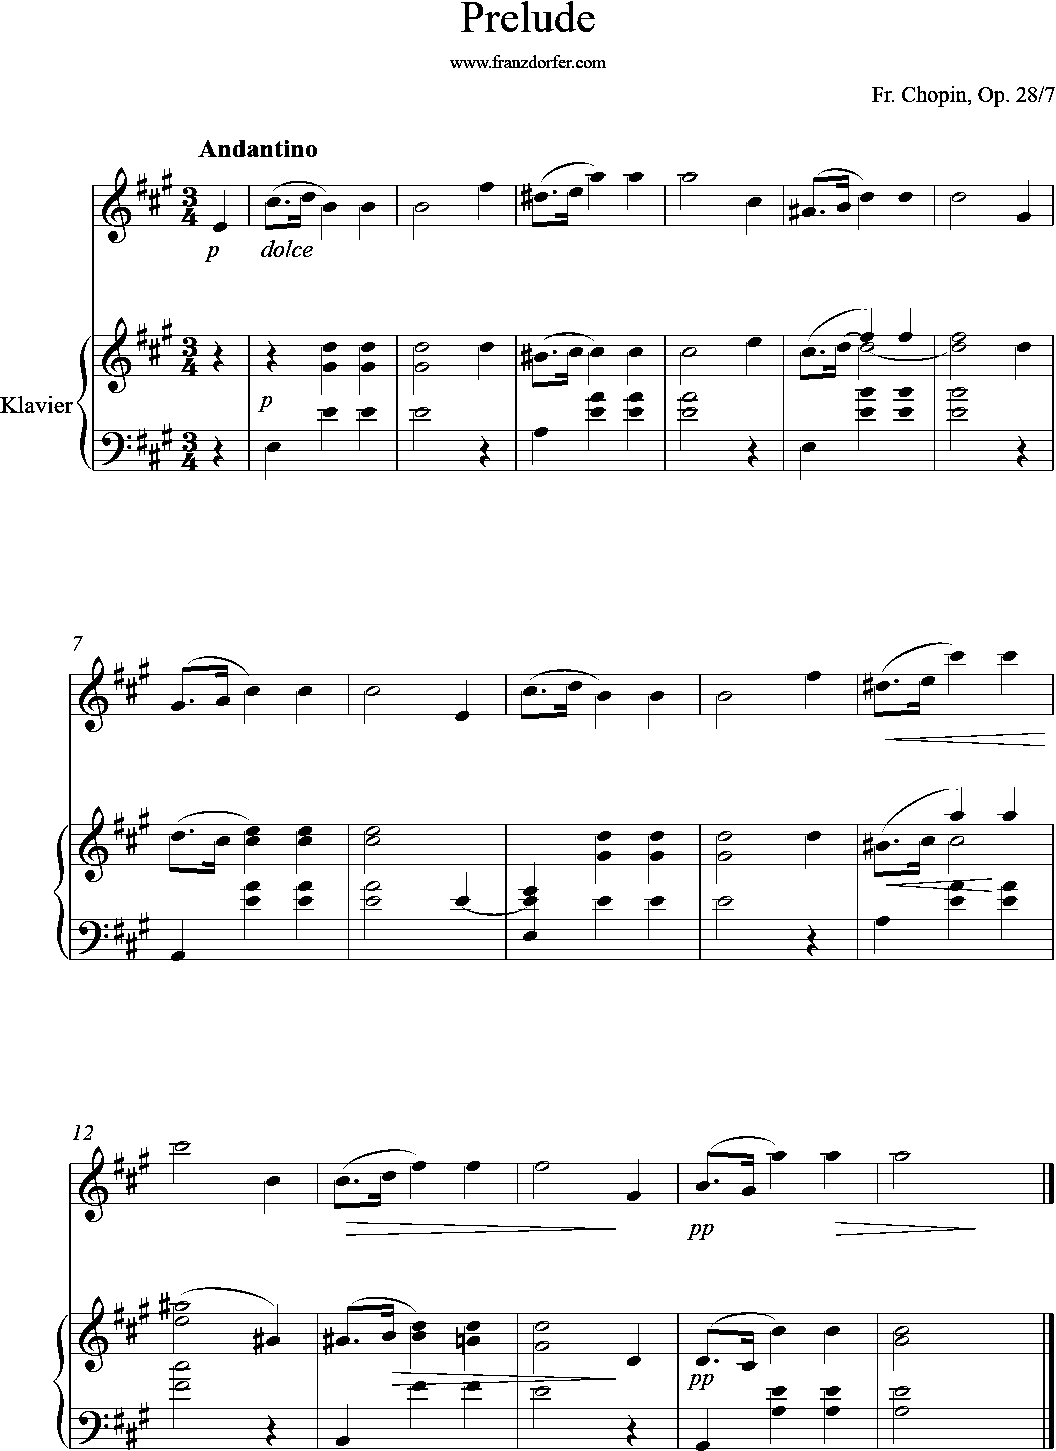 Prelude- Op-28/7, Chopin